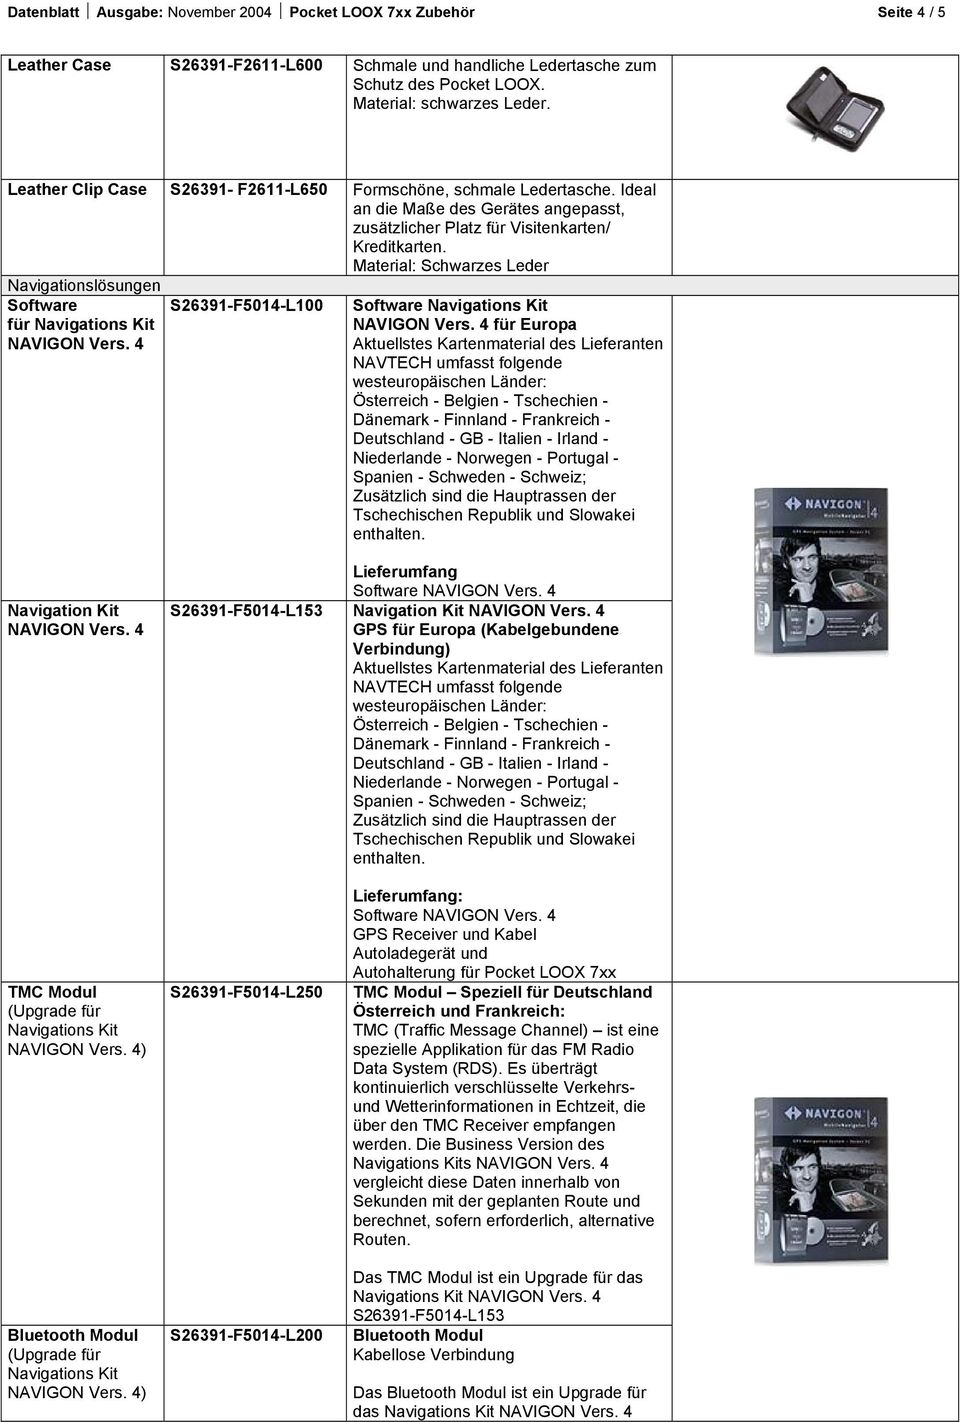 Material: Schwarzes Leder Navigationslösungen Software für Navigations Kit NAVIGON Vers. 4 S26391-F5014-L100 Software Navigations Kit NAVIGON Vers.